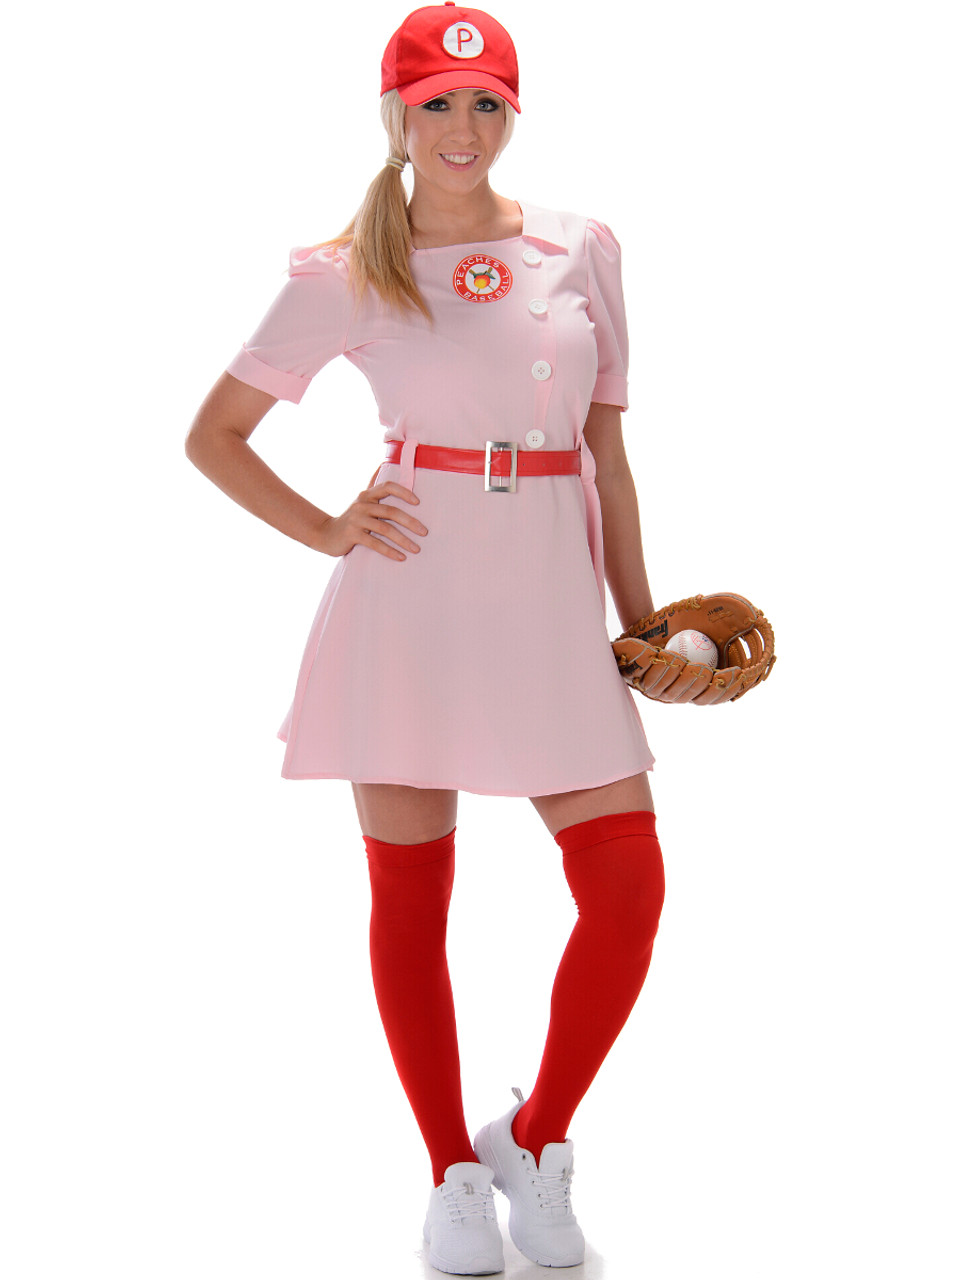 Baseball Player Costume Dress